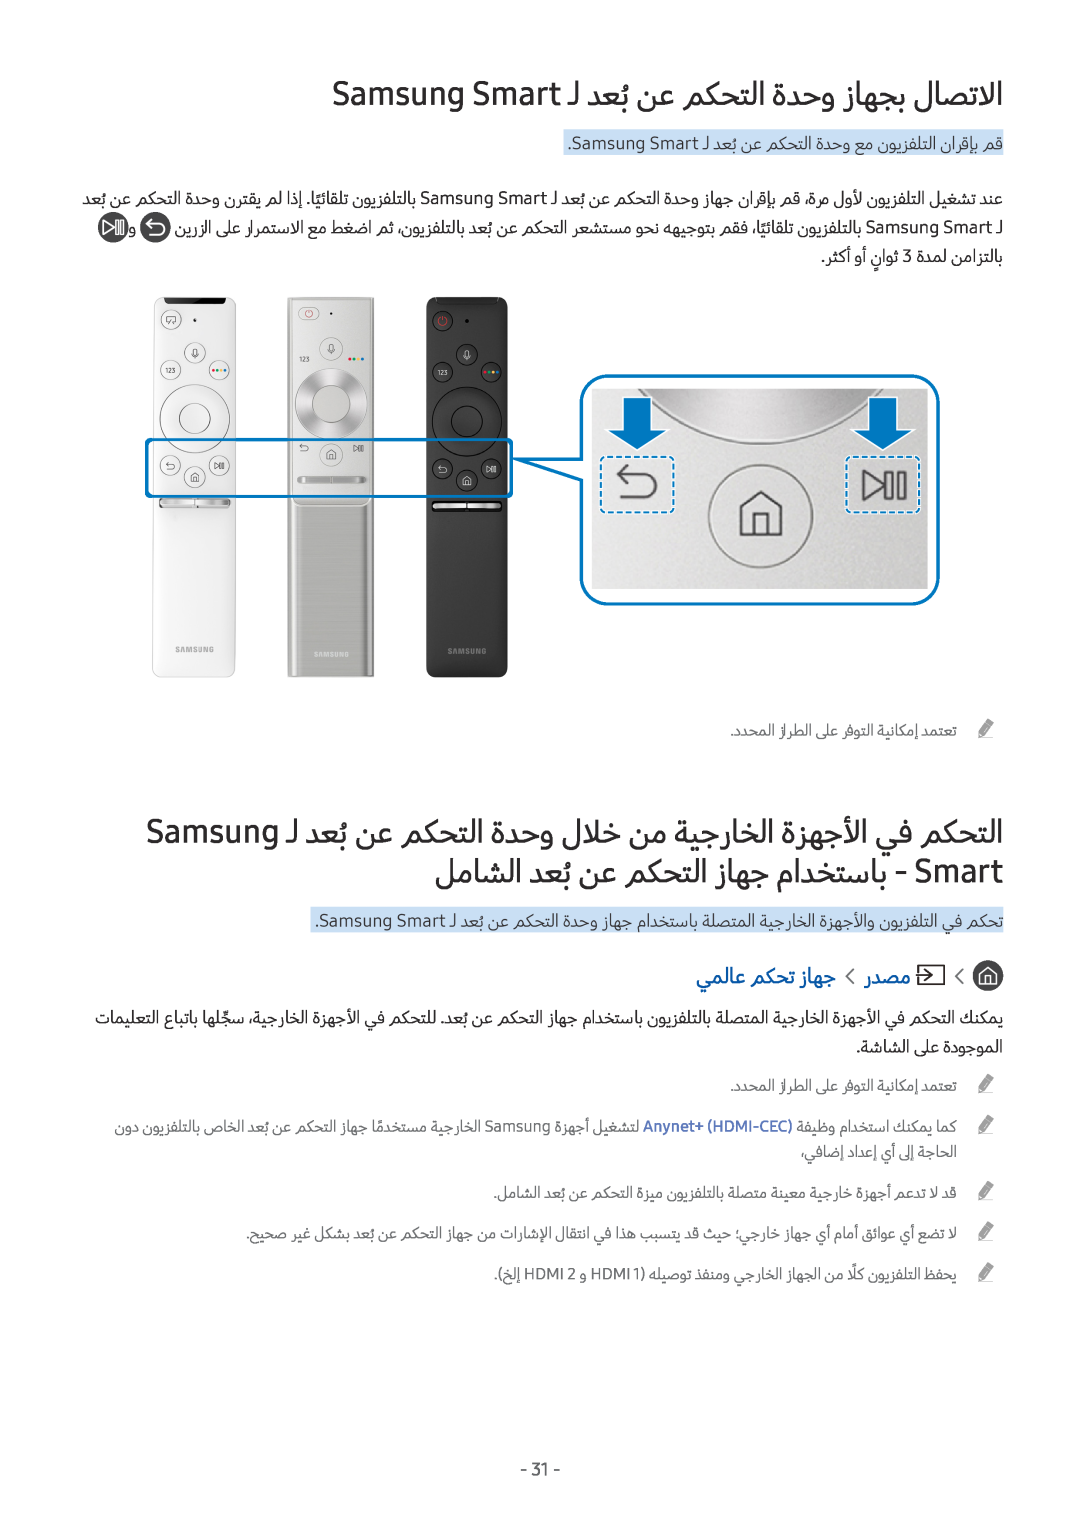 Samsung UE65MU9002TXXH, UE40MU6402UXXH manual Samsung Smart ـل دعبُنع مكحتلا ةدحو زاهجب لاصتلاا, يملاع مكحت زاهج ردصم 